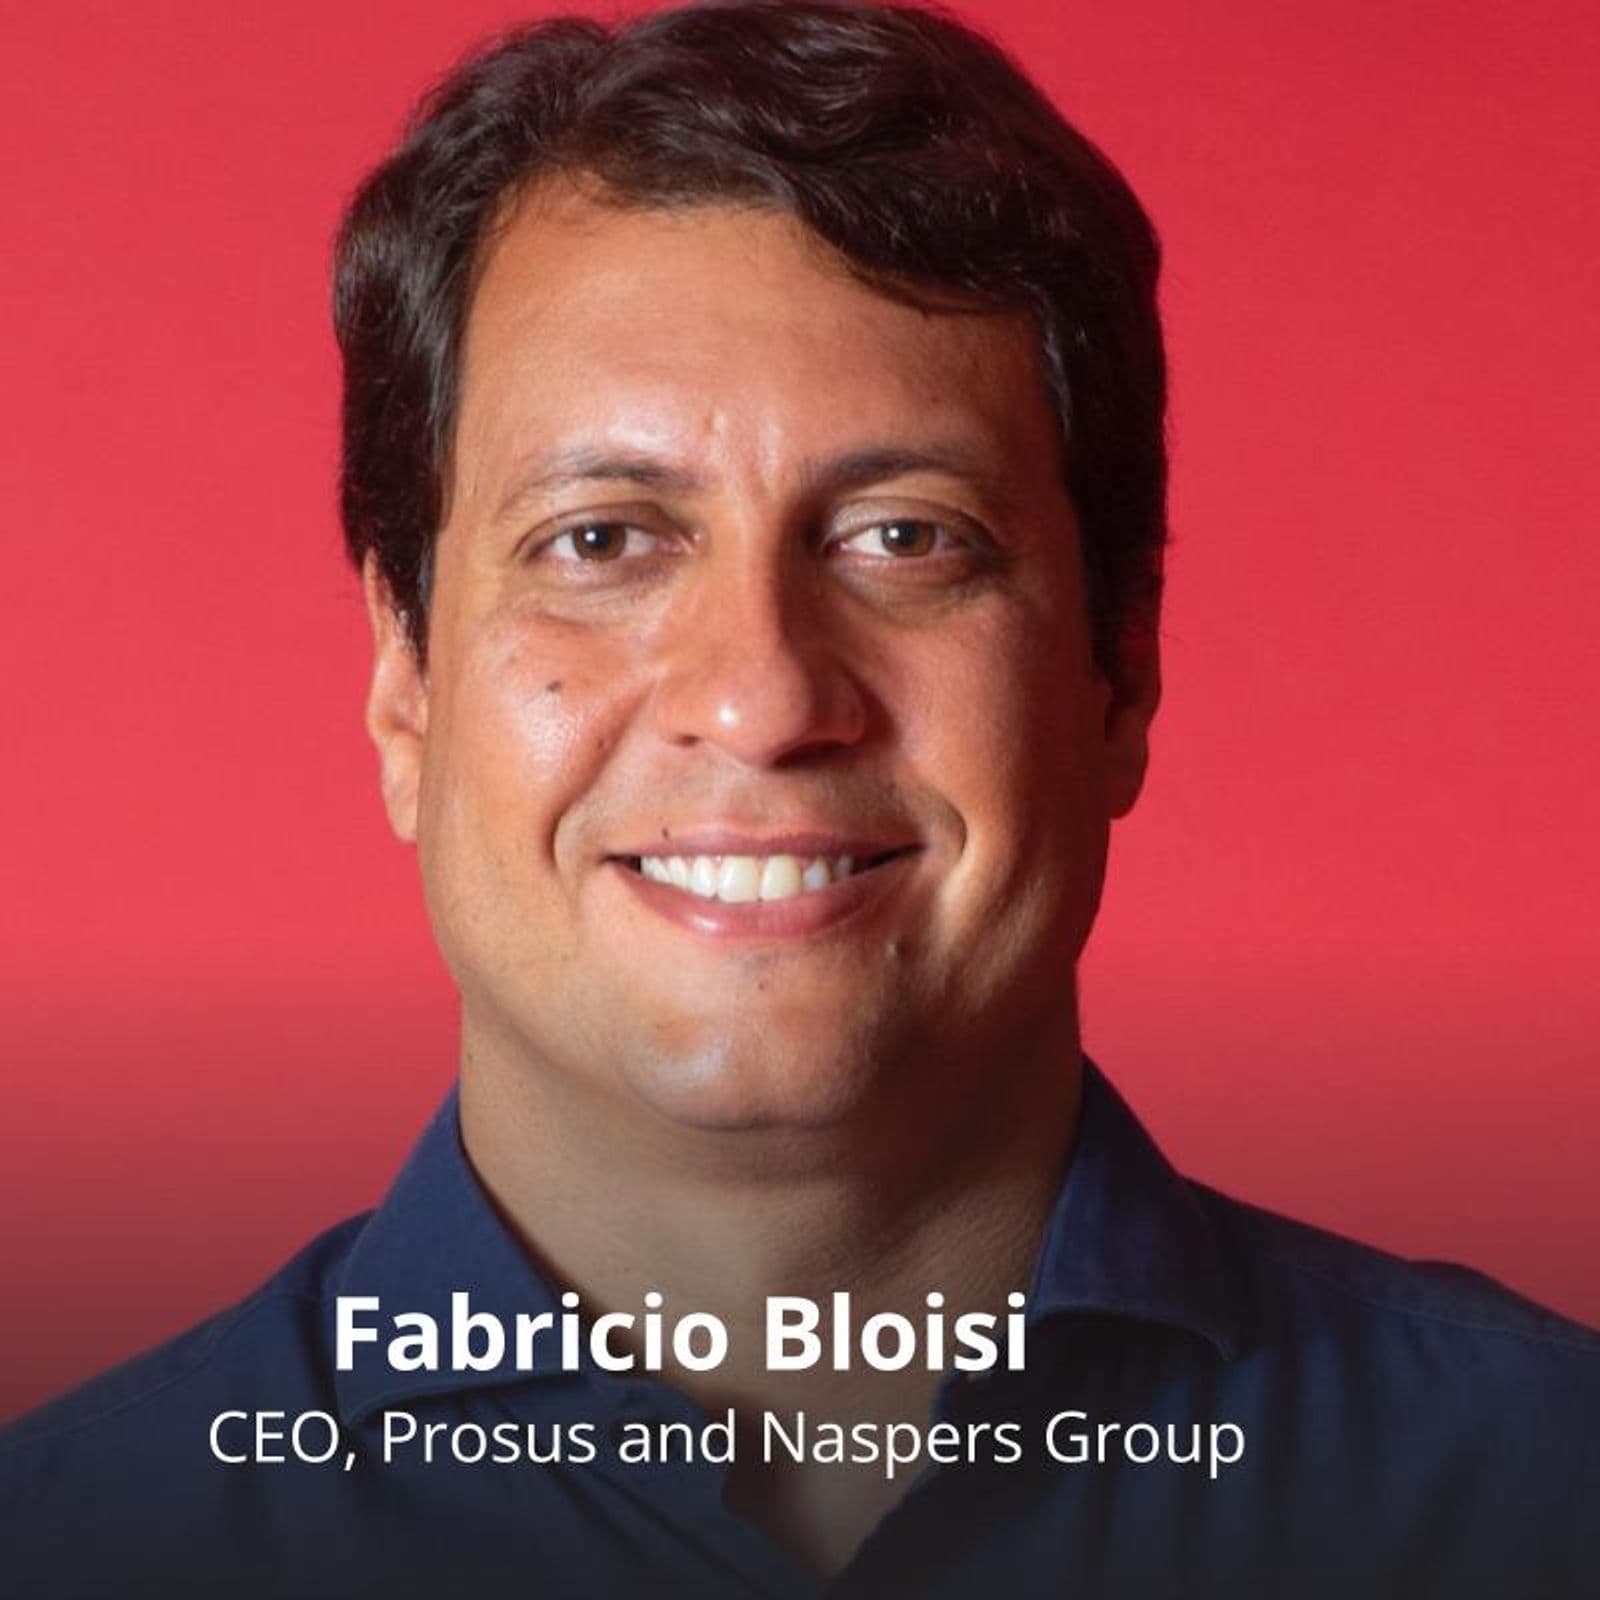 Prosus, Naspers appoint Fabricio Bloisi as CEO